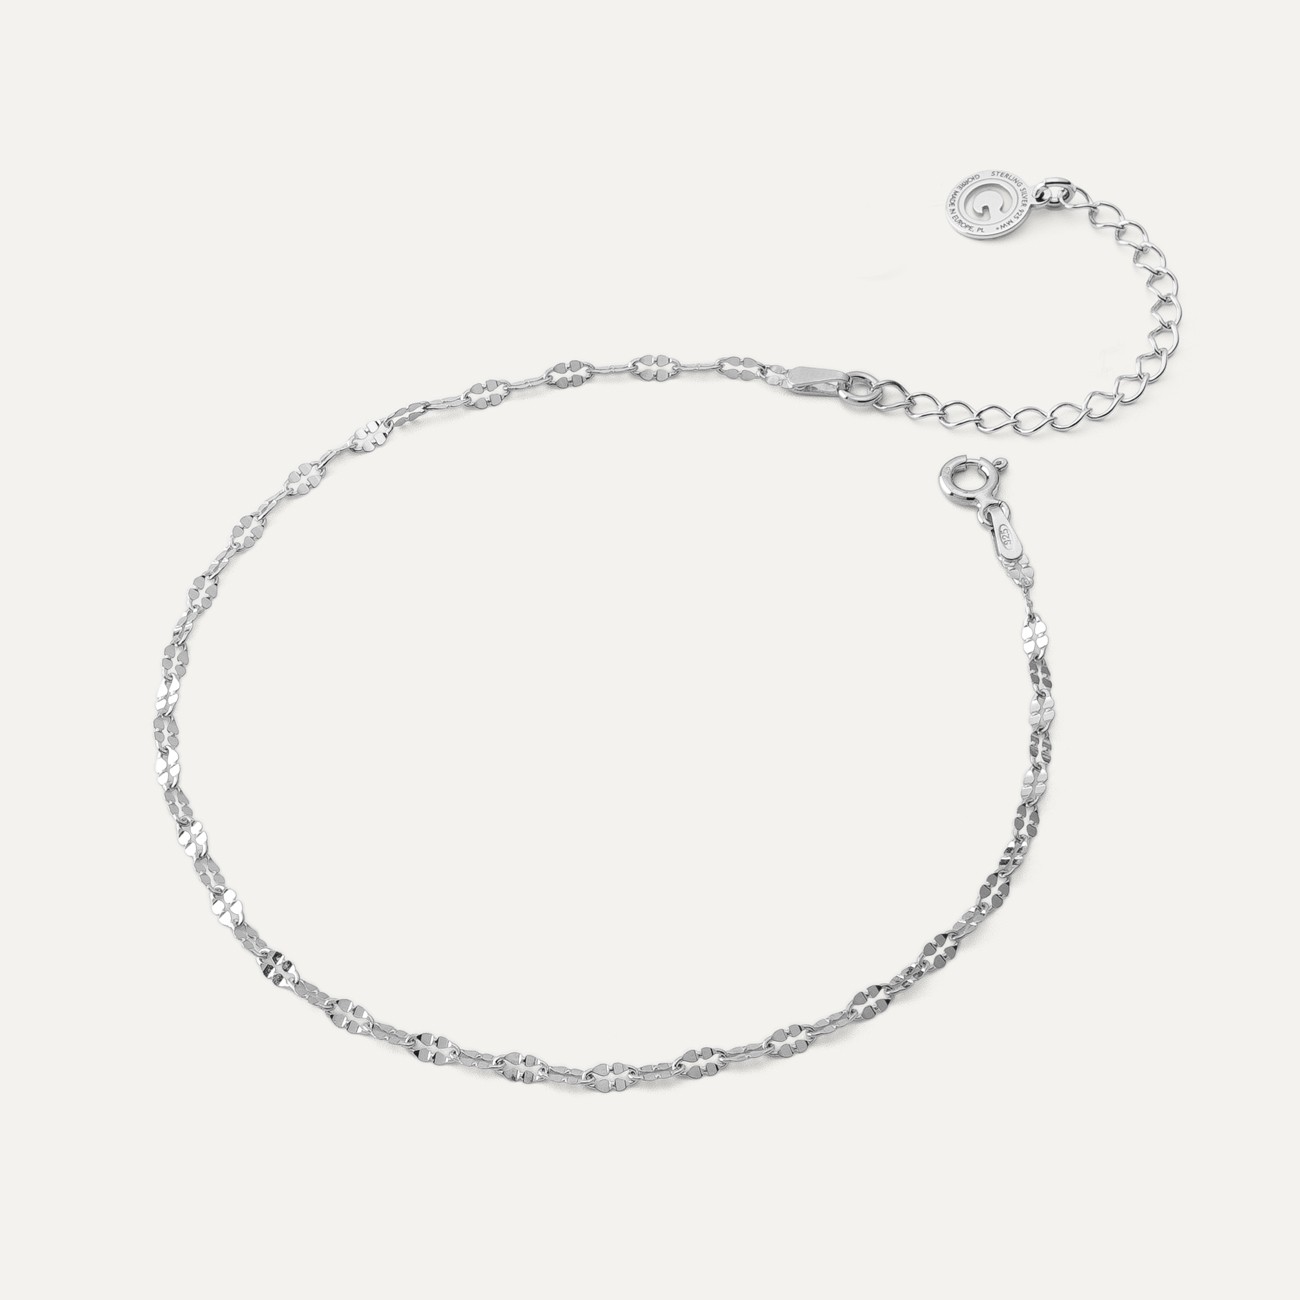 Giorre Woman's Bracelet 38504